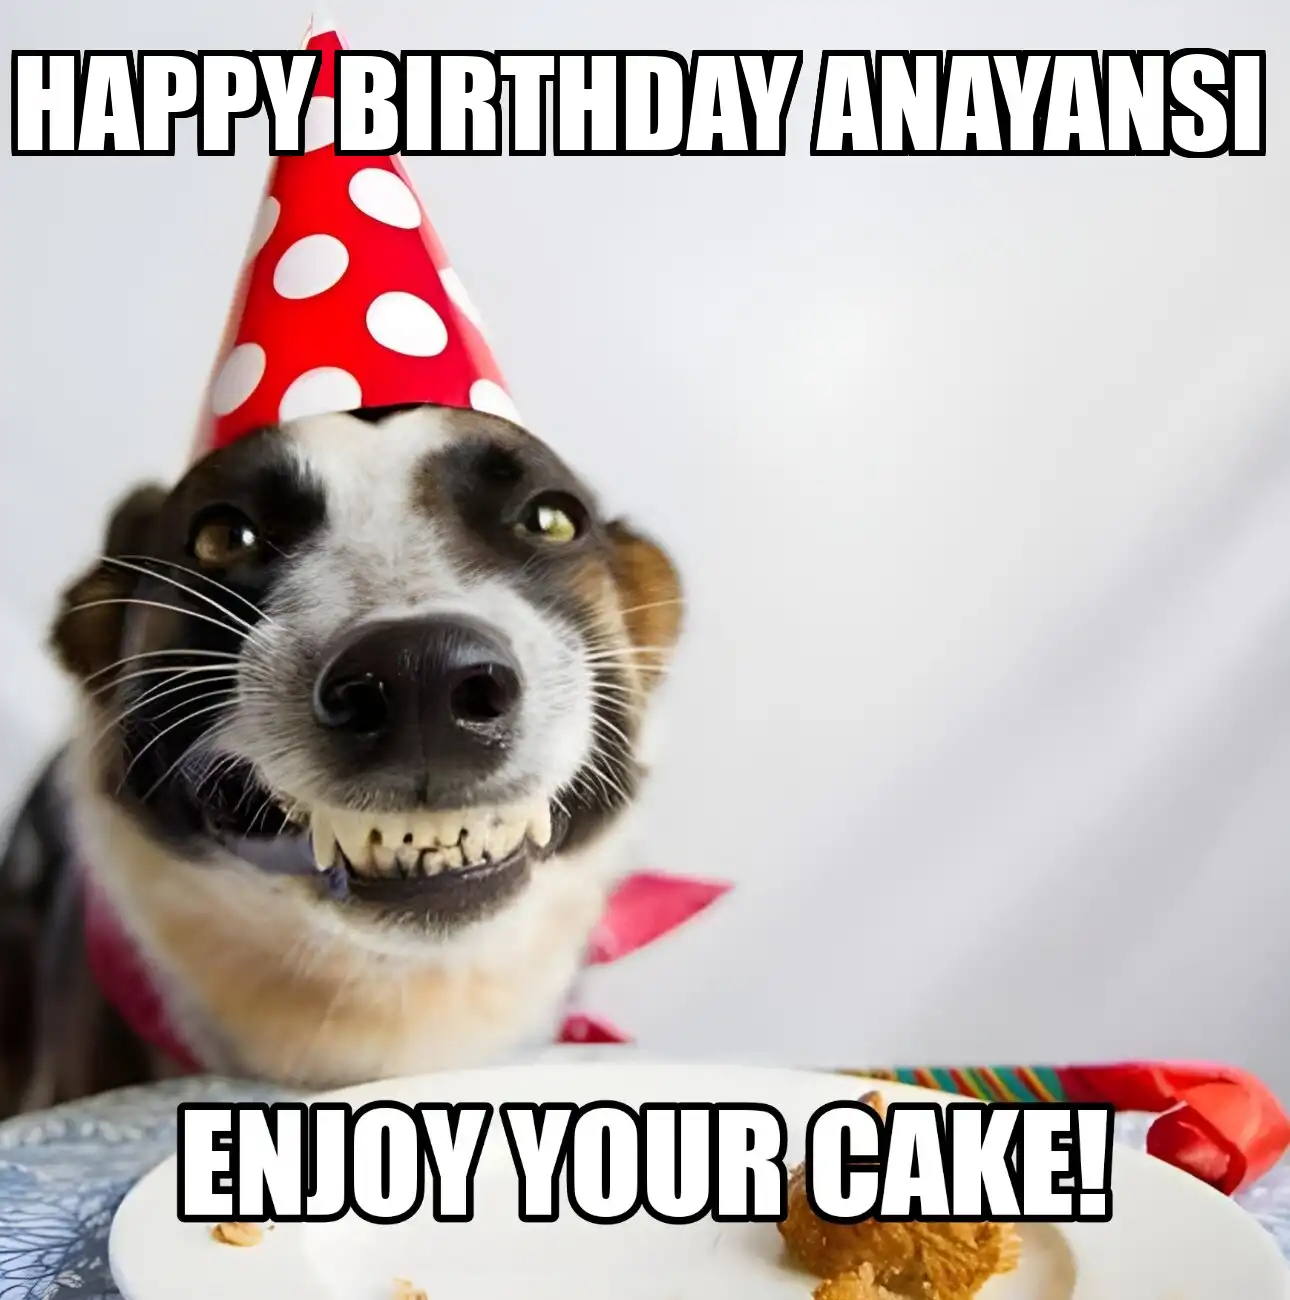 Happy Birthday Anayansi Enjoy Your Cake Dog Meme